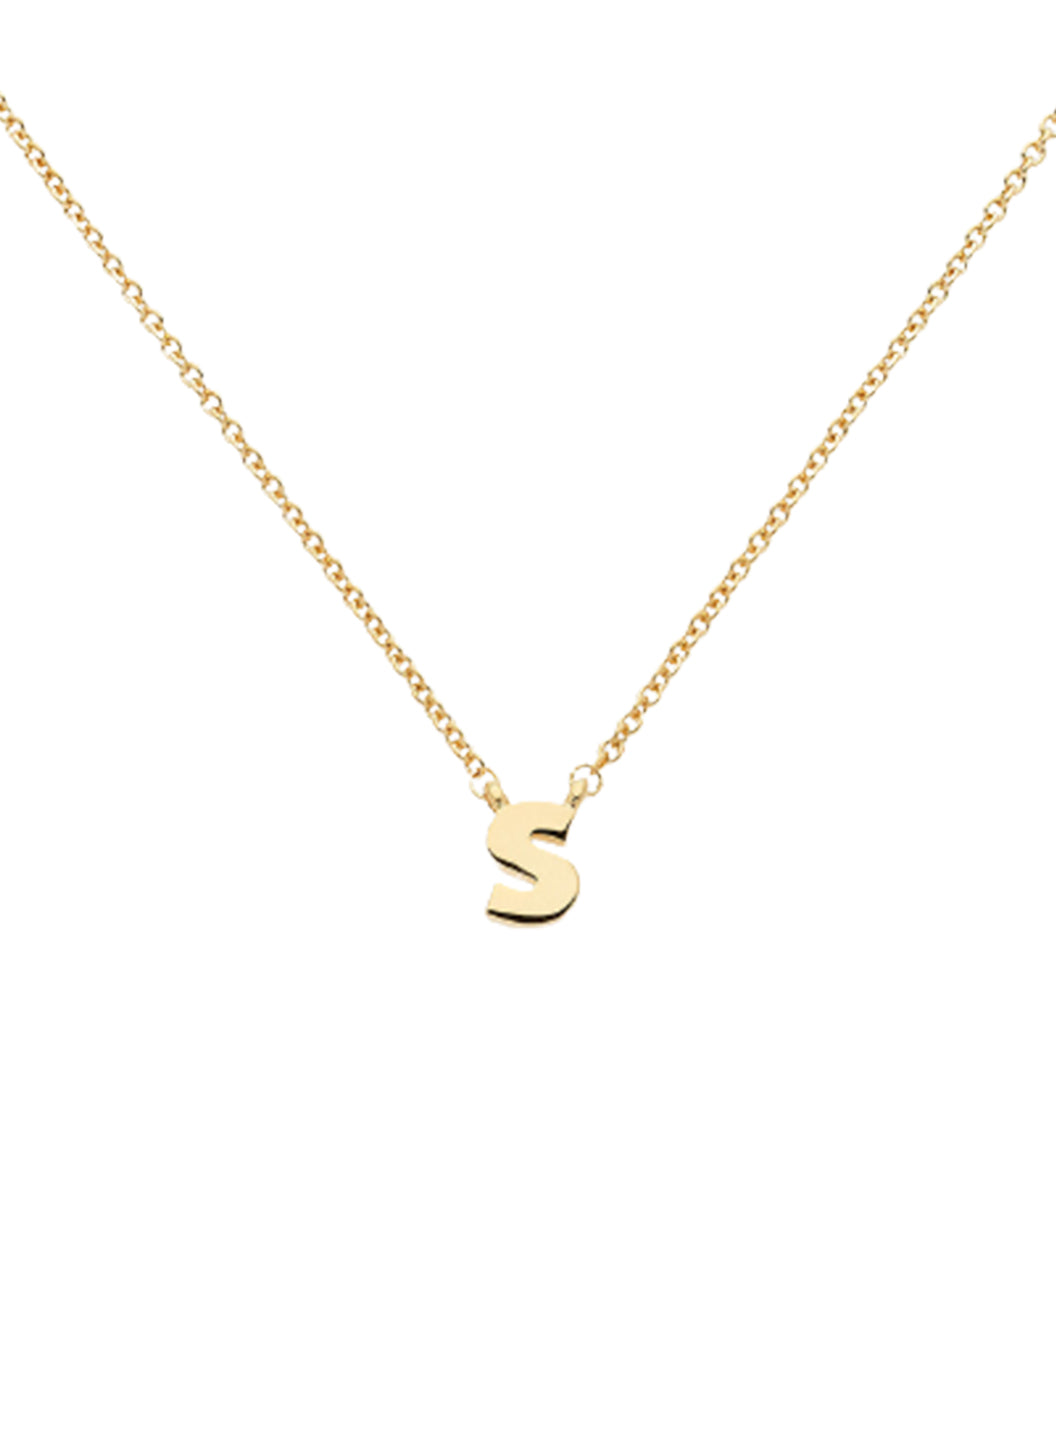 Gold S Pendant Necklace